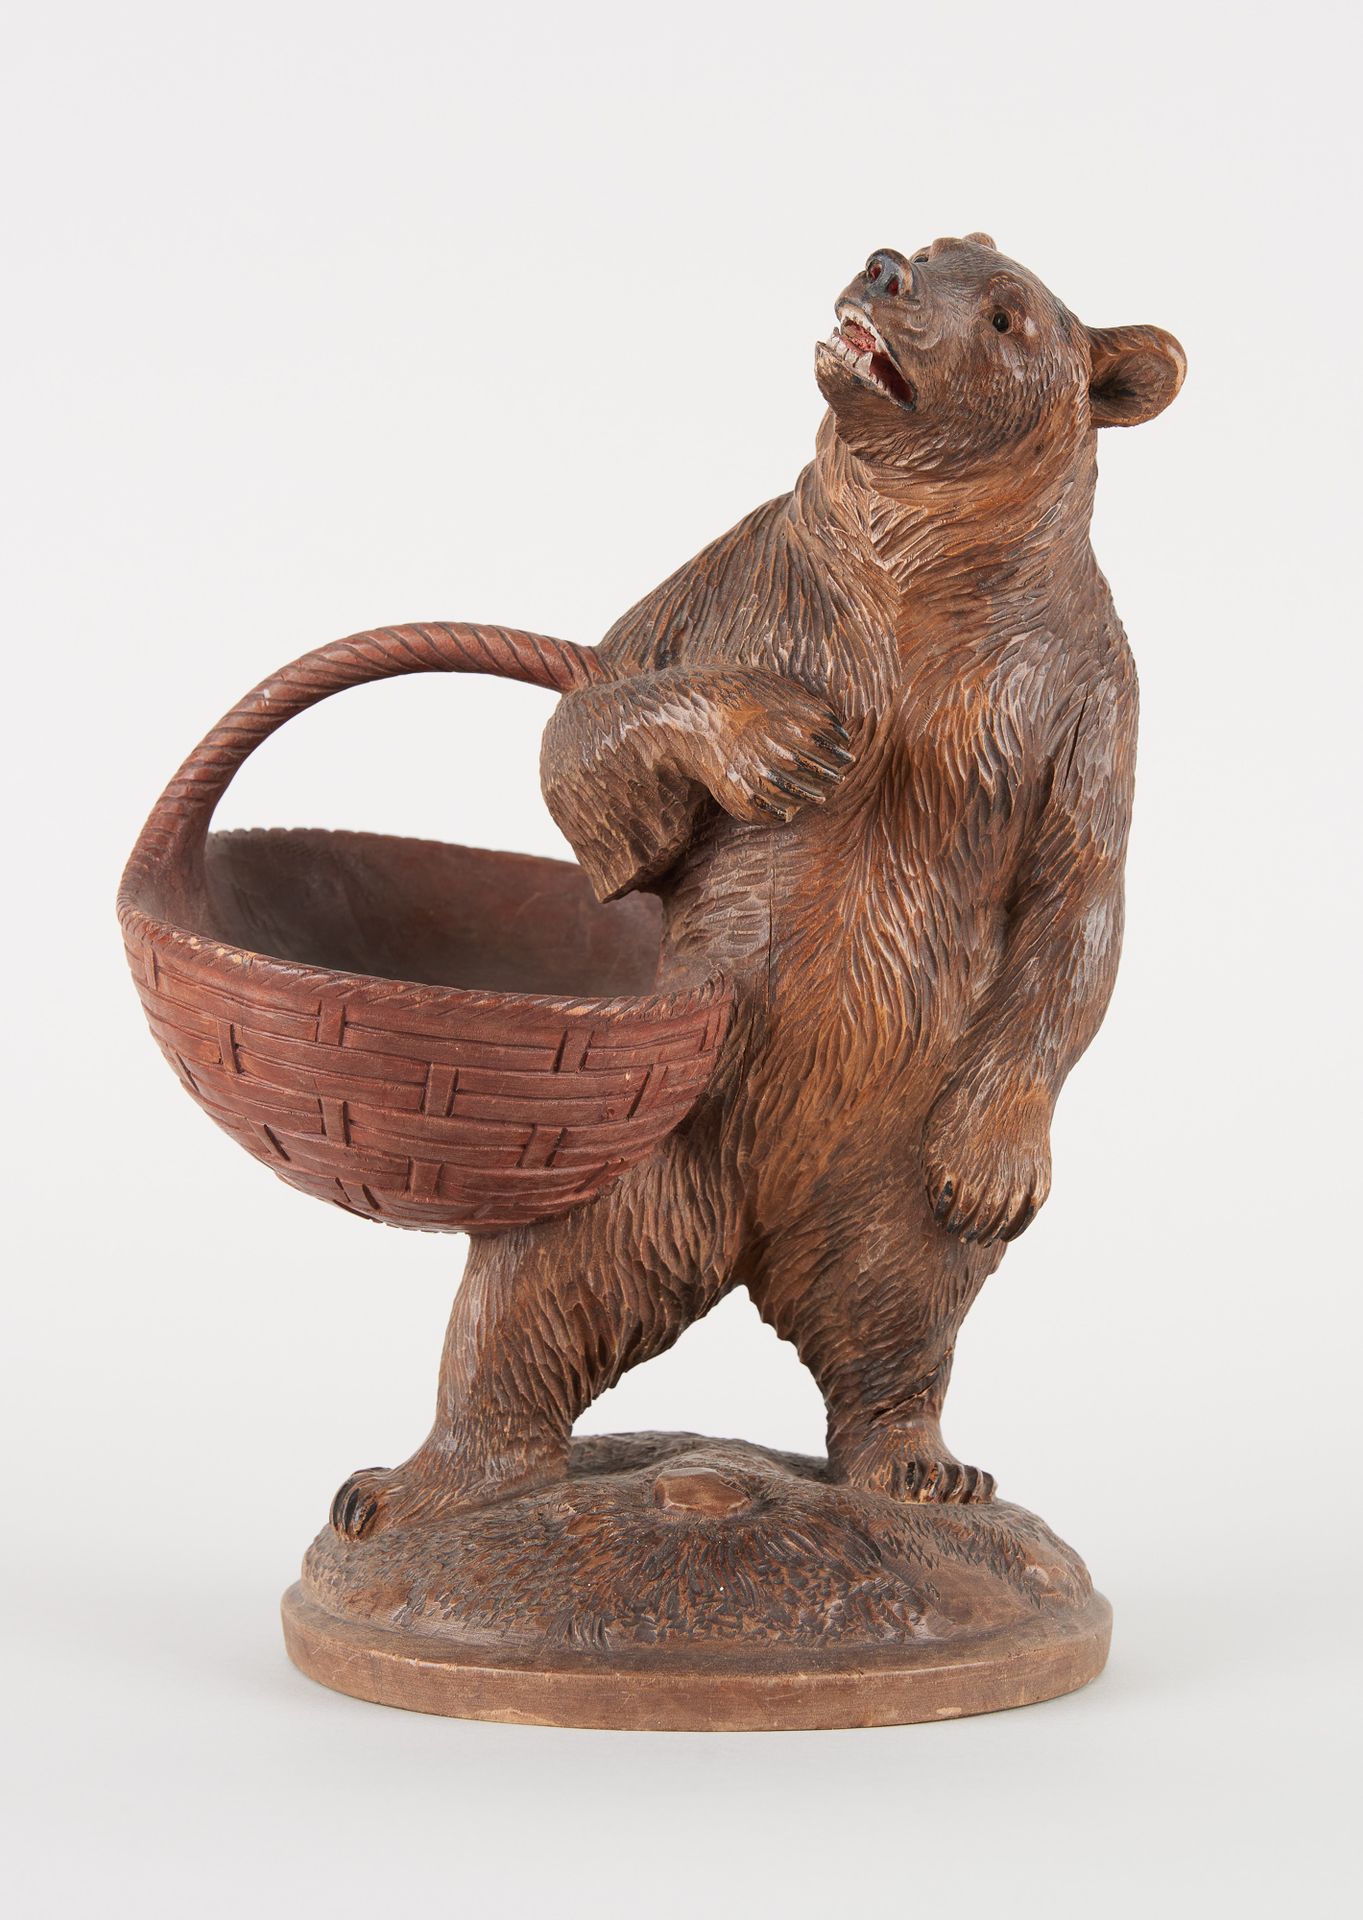 Travail de la Forêt Noire. Escultura en madera natural: Oso con cesta.

Tamaño: &hellip;